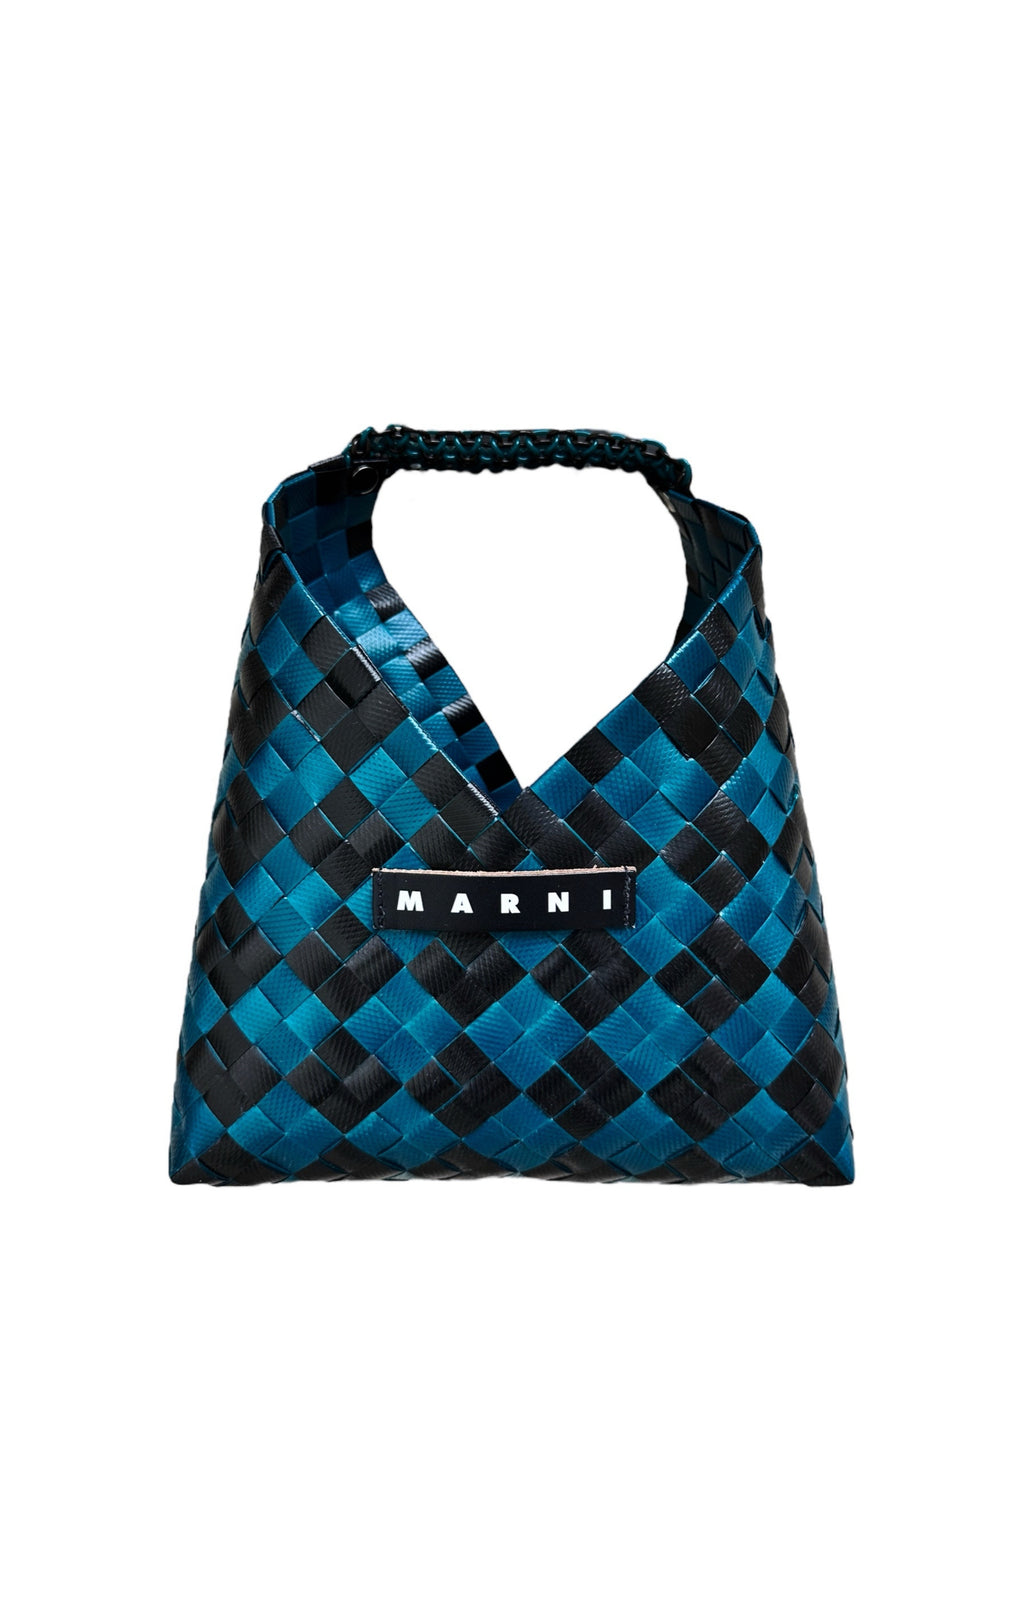 MARNI (RARE & NEW) with tags Bag Size: 9" x 4.5" x 10"; 6" drop handle